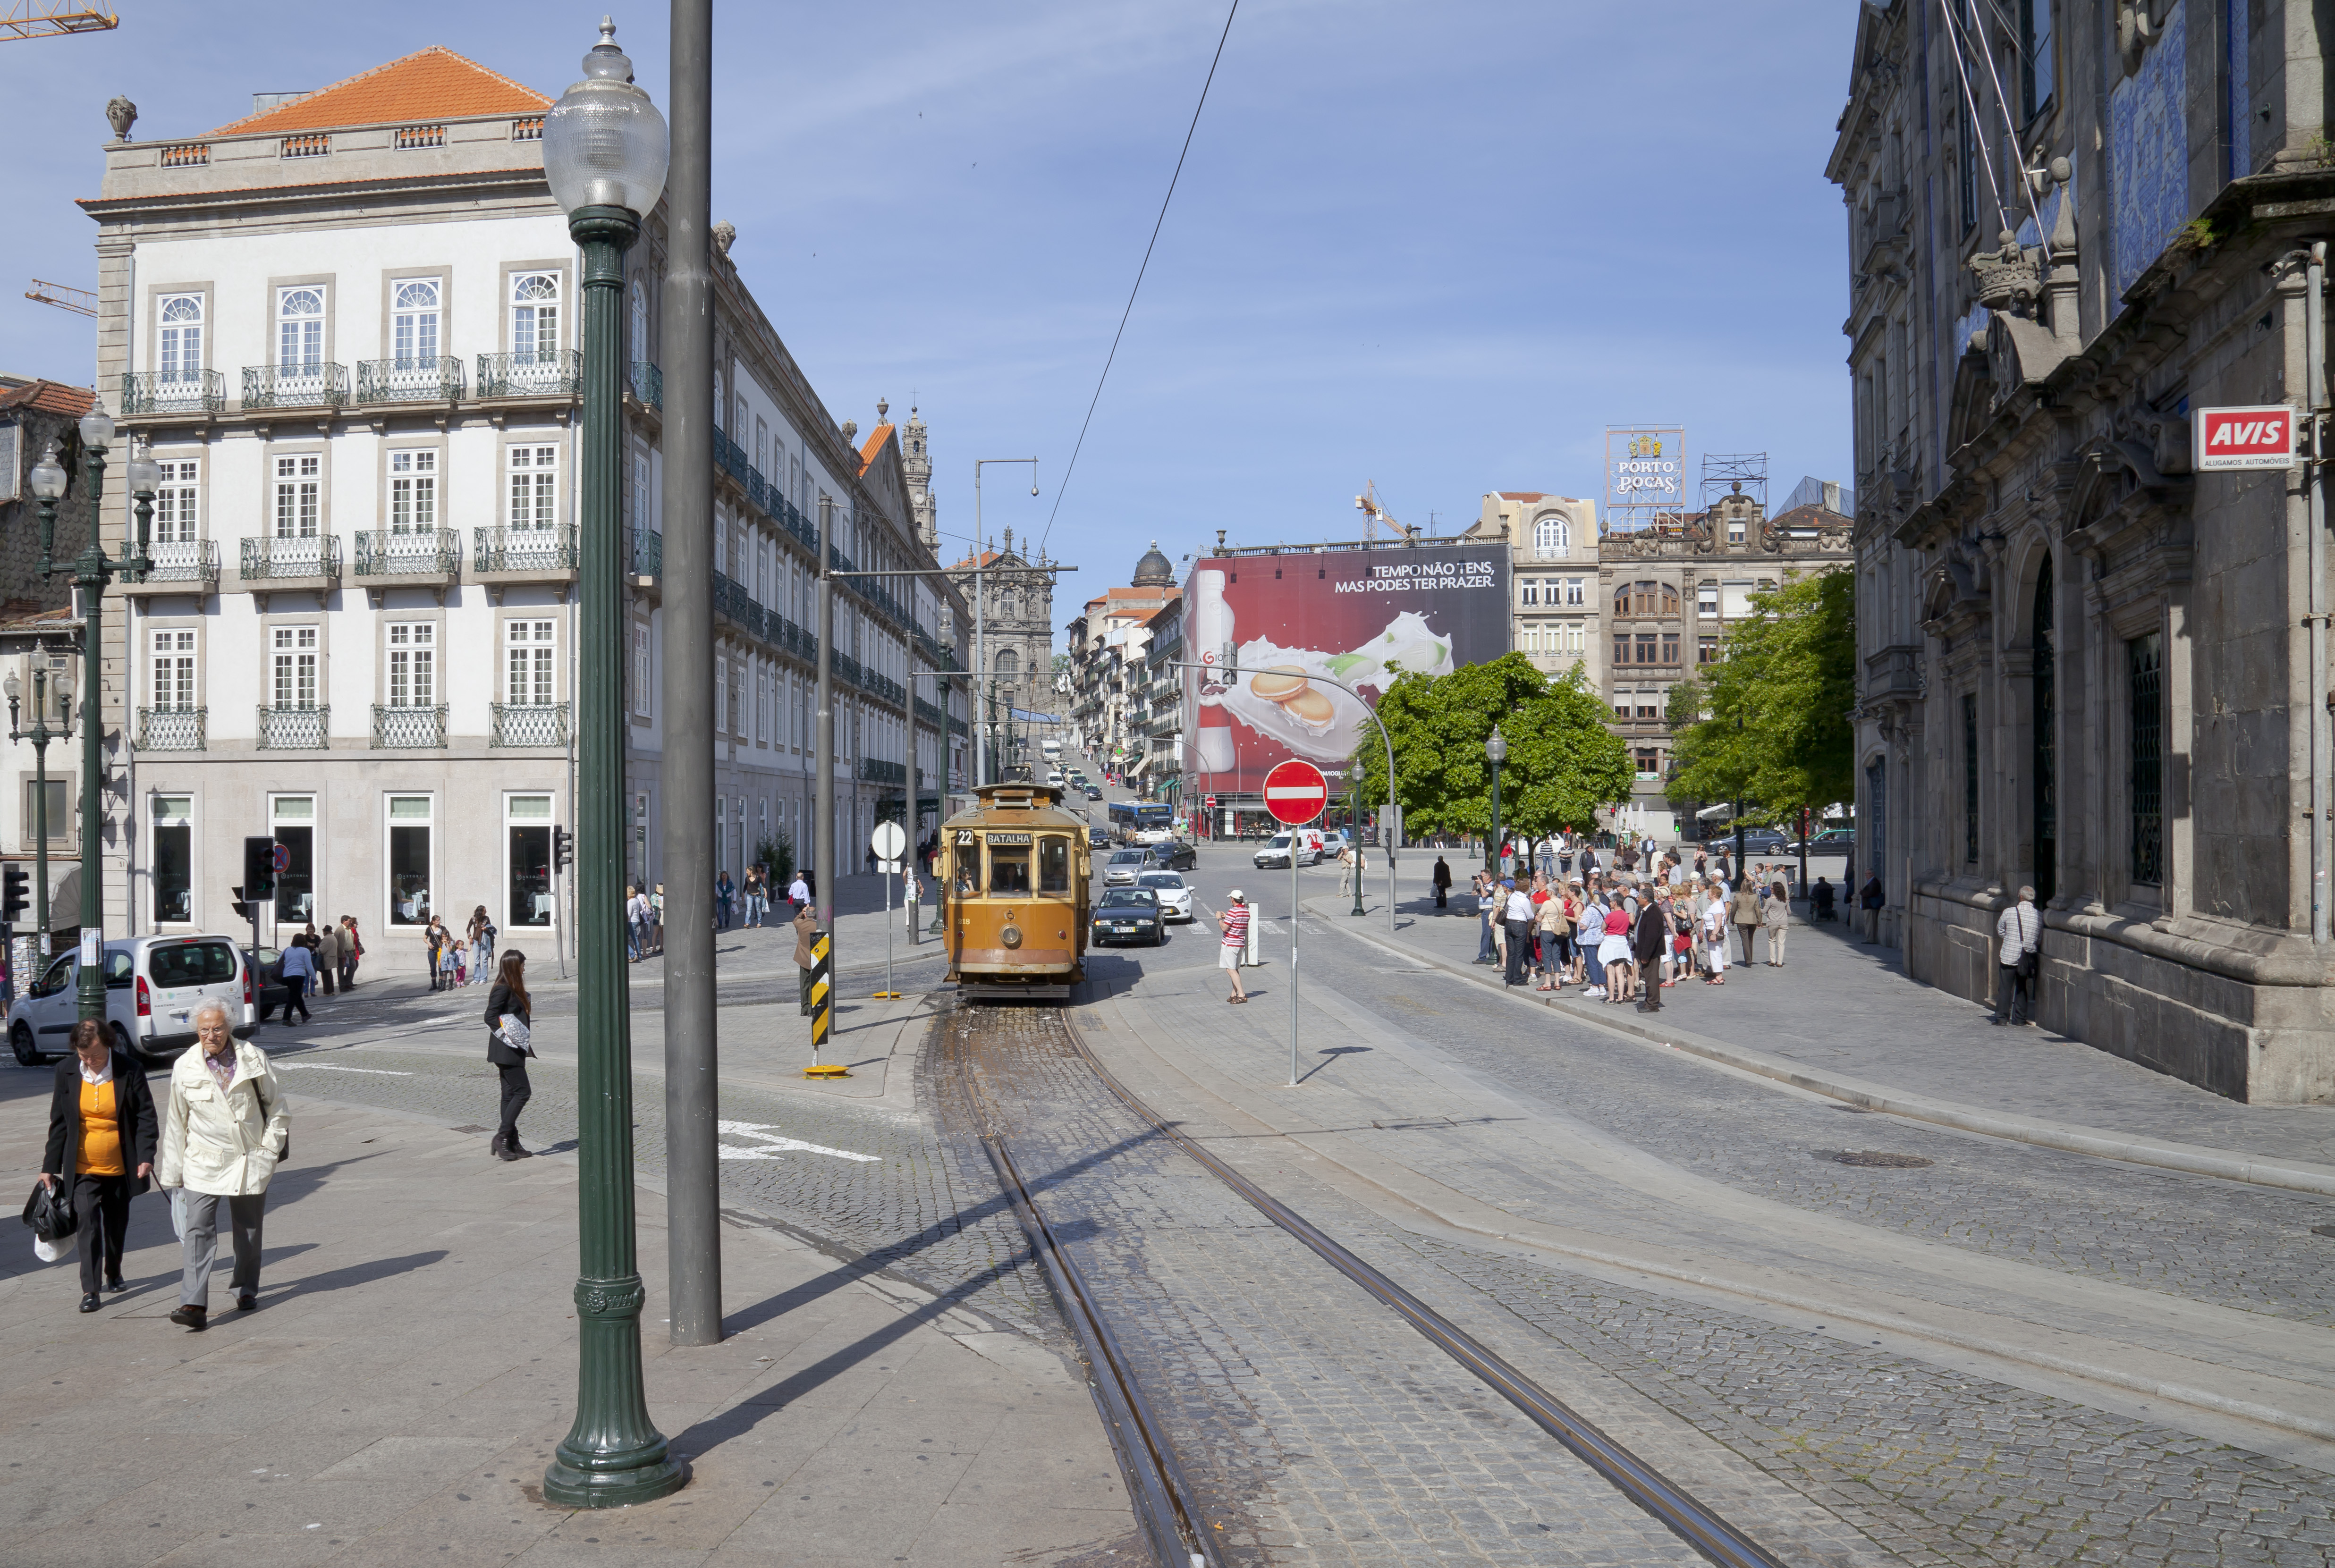 Tranvía de Oporto, Portugal, 2012-05-09, DD 01